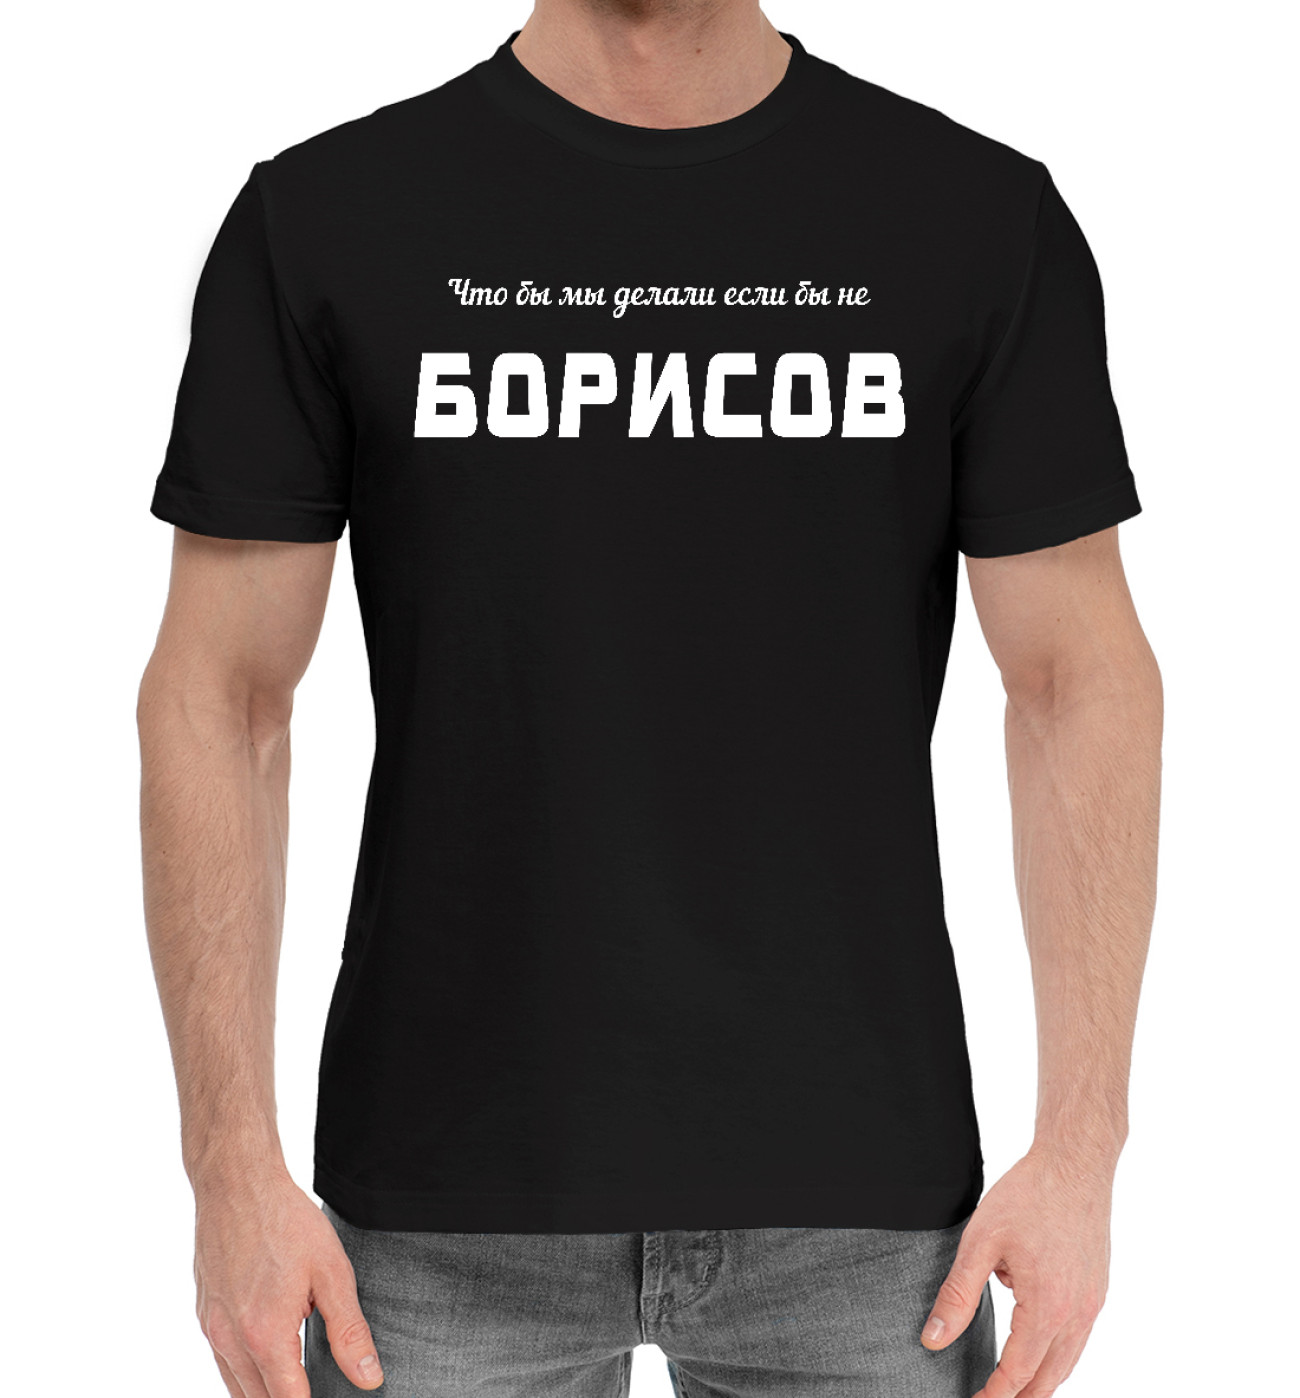 Мужская Хлопковая футболка Борисов-Спаситель, артикул: IMR-355046-hfu-2